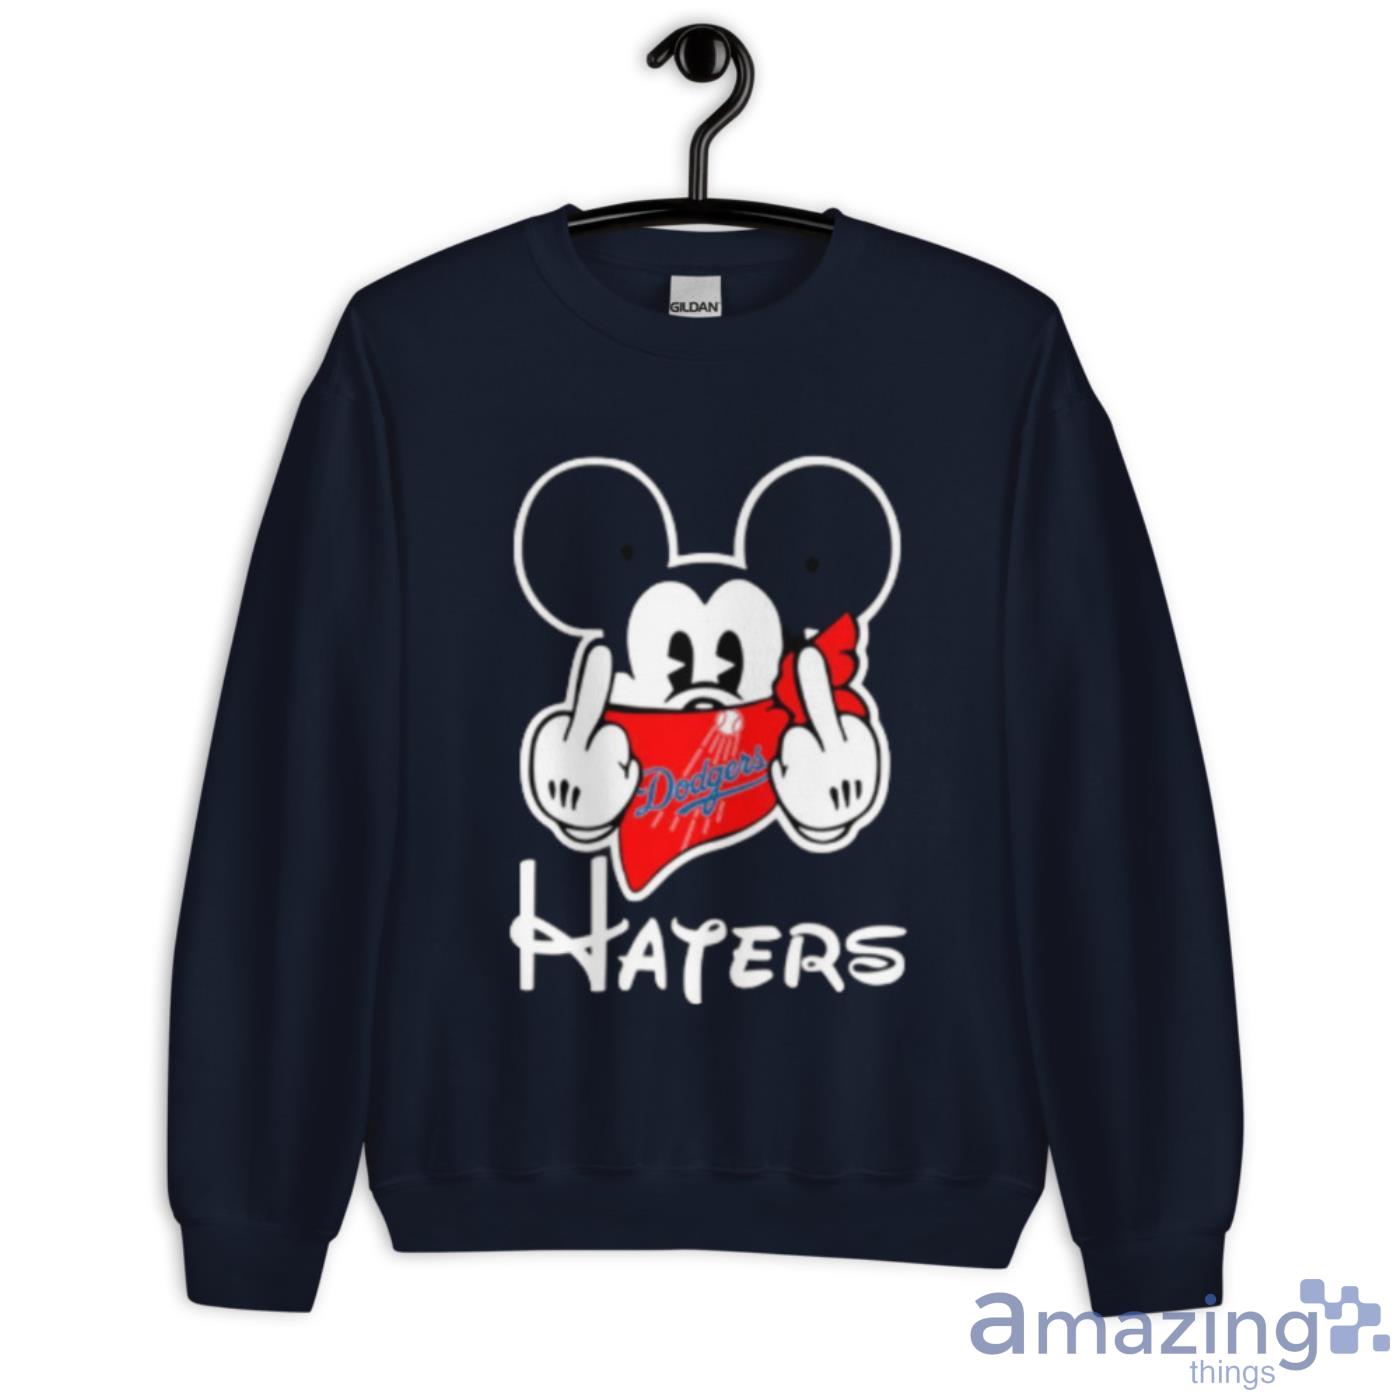 Disney Mickey Mouse Loves Los Angeles Dodgers Heart T-Shirt - TeeNavi